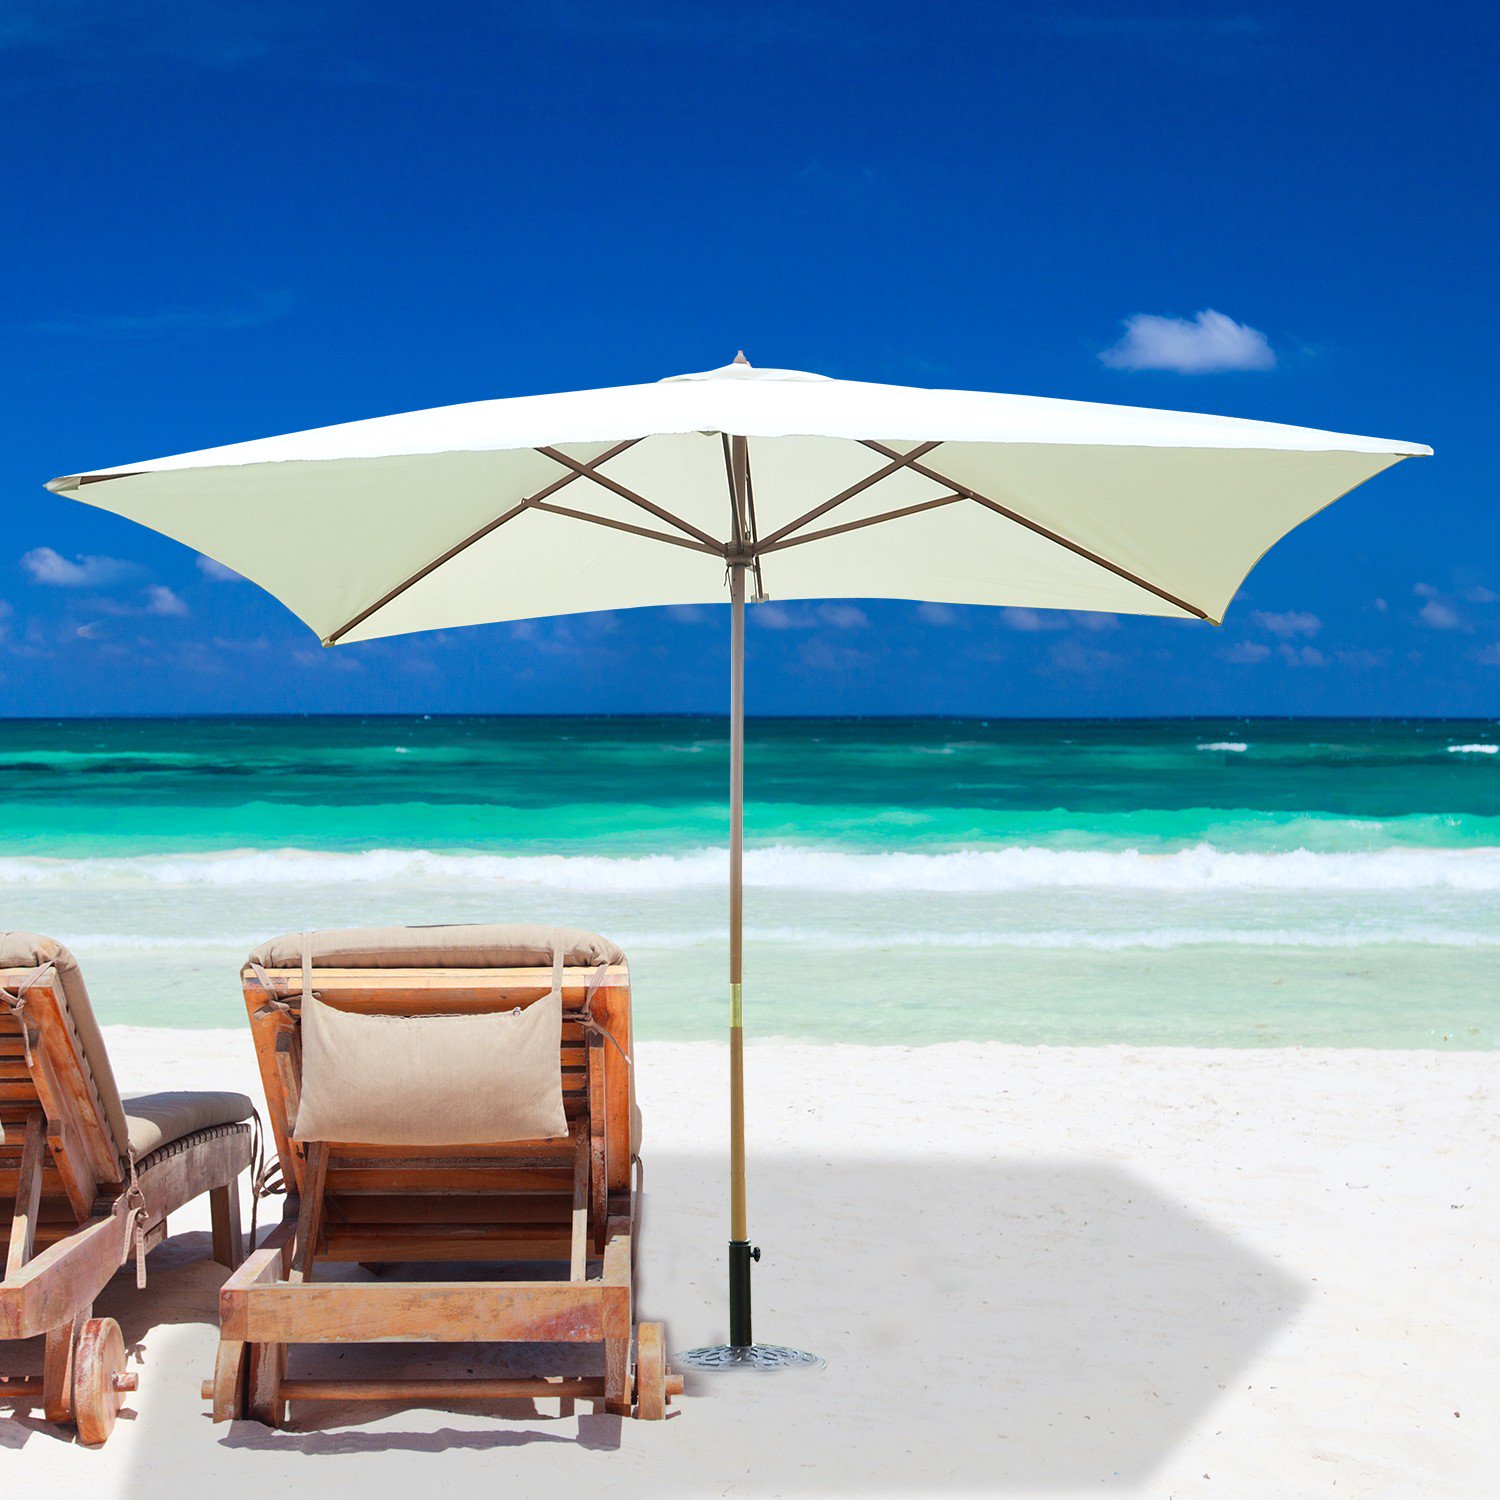 Free photo: Parasol on beach - Beach, Holiday, Parasol - Free Download ...